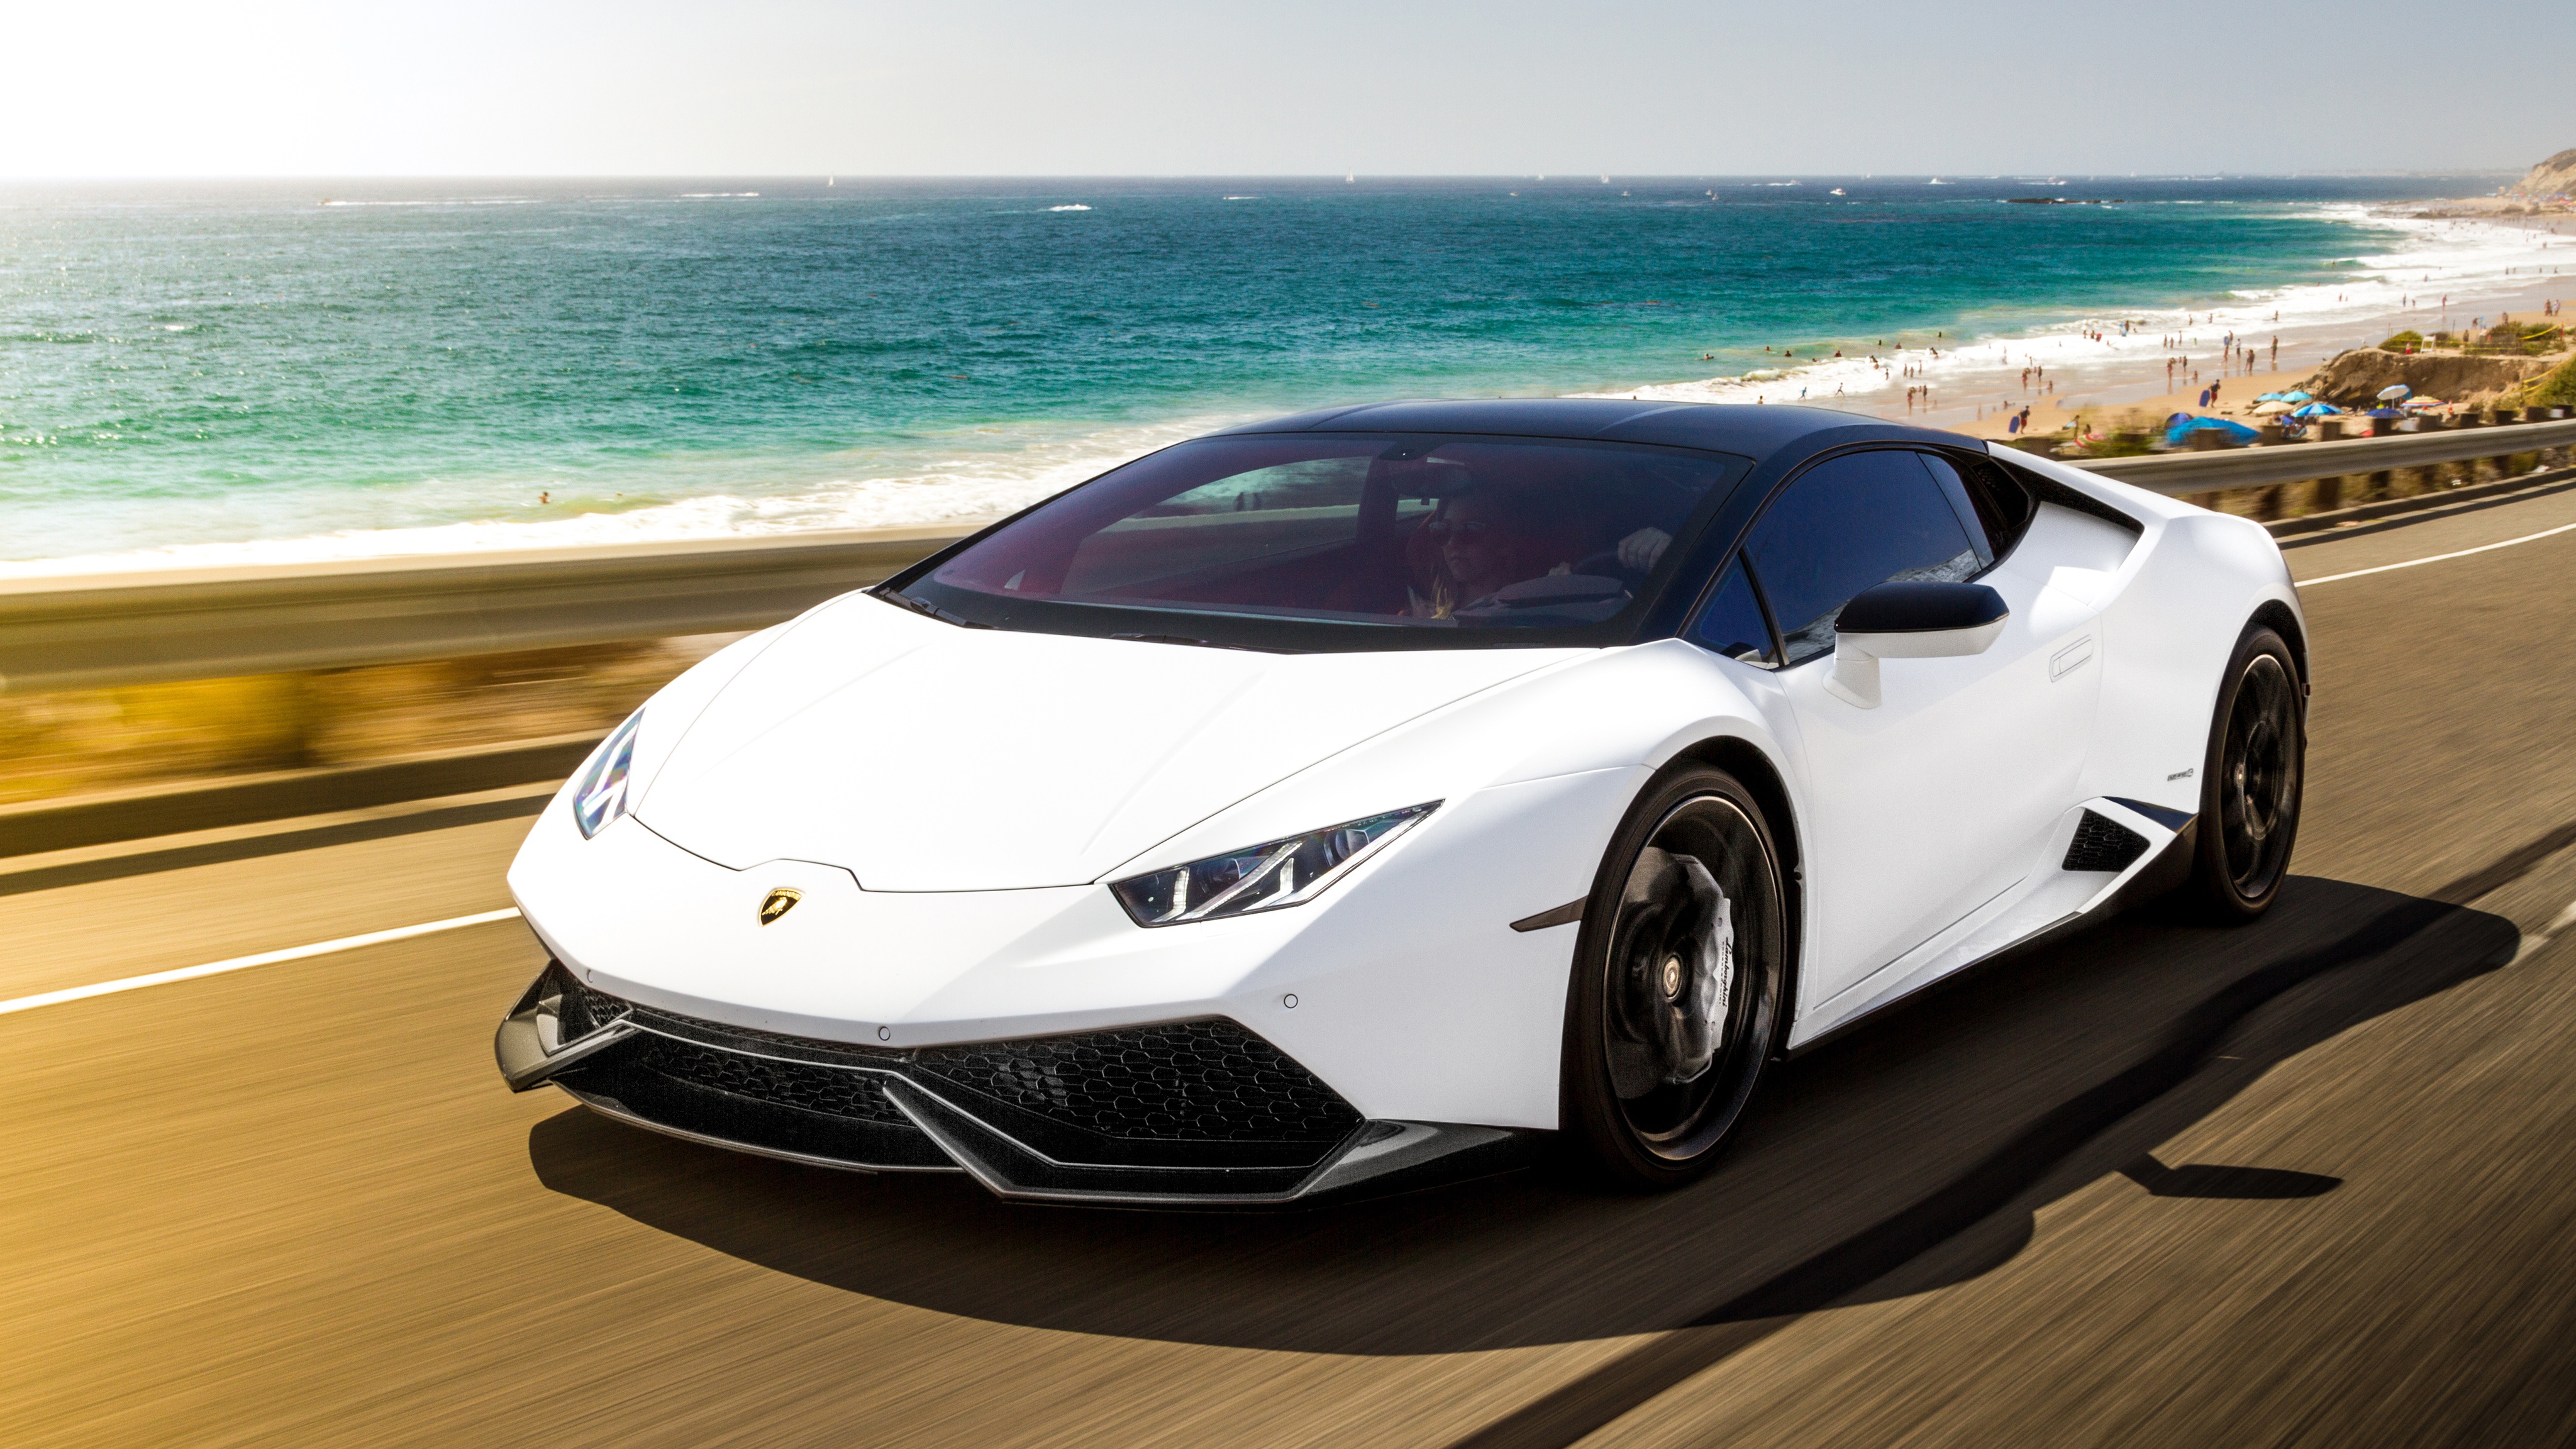 Baixe gratuitamente a imagem Lamborghini, Carro, Super Carro, Veículos, Carro Branco, Lamborghini Huracán na área de trabalho do seu PC